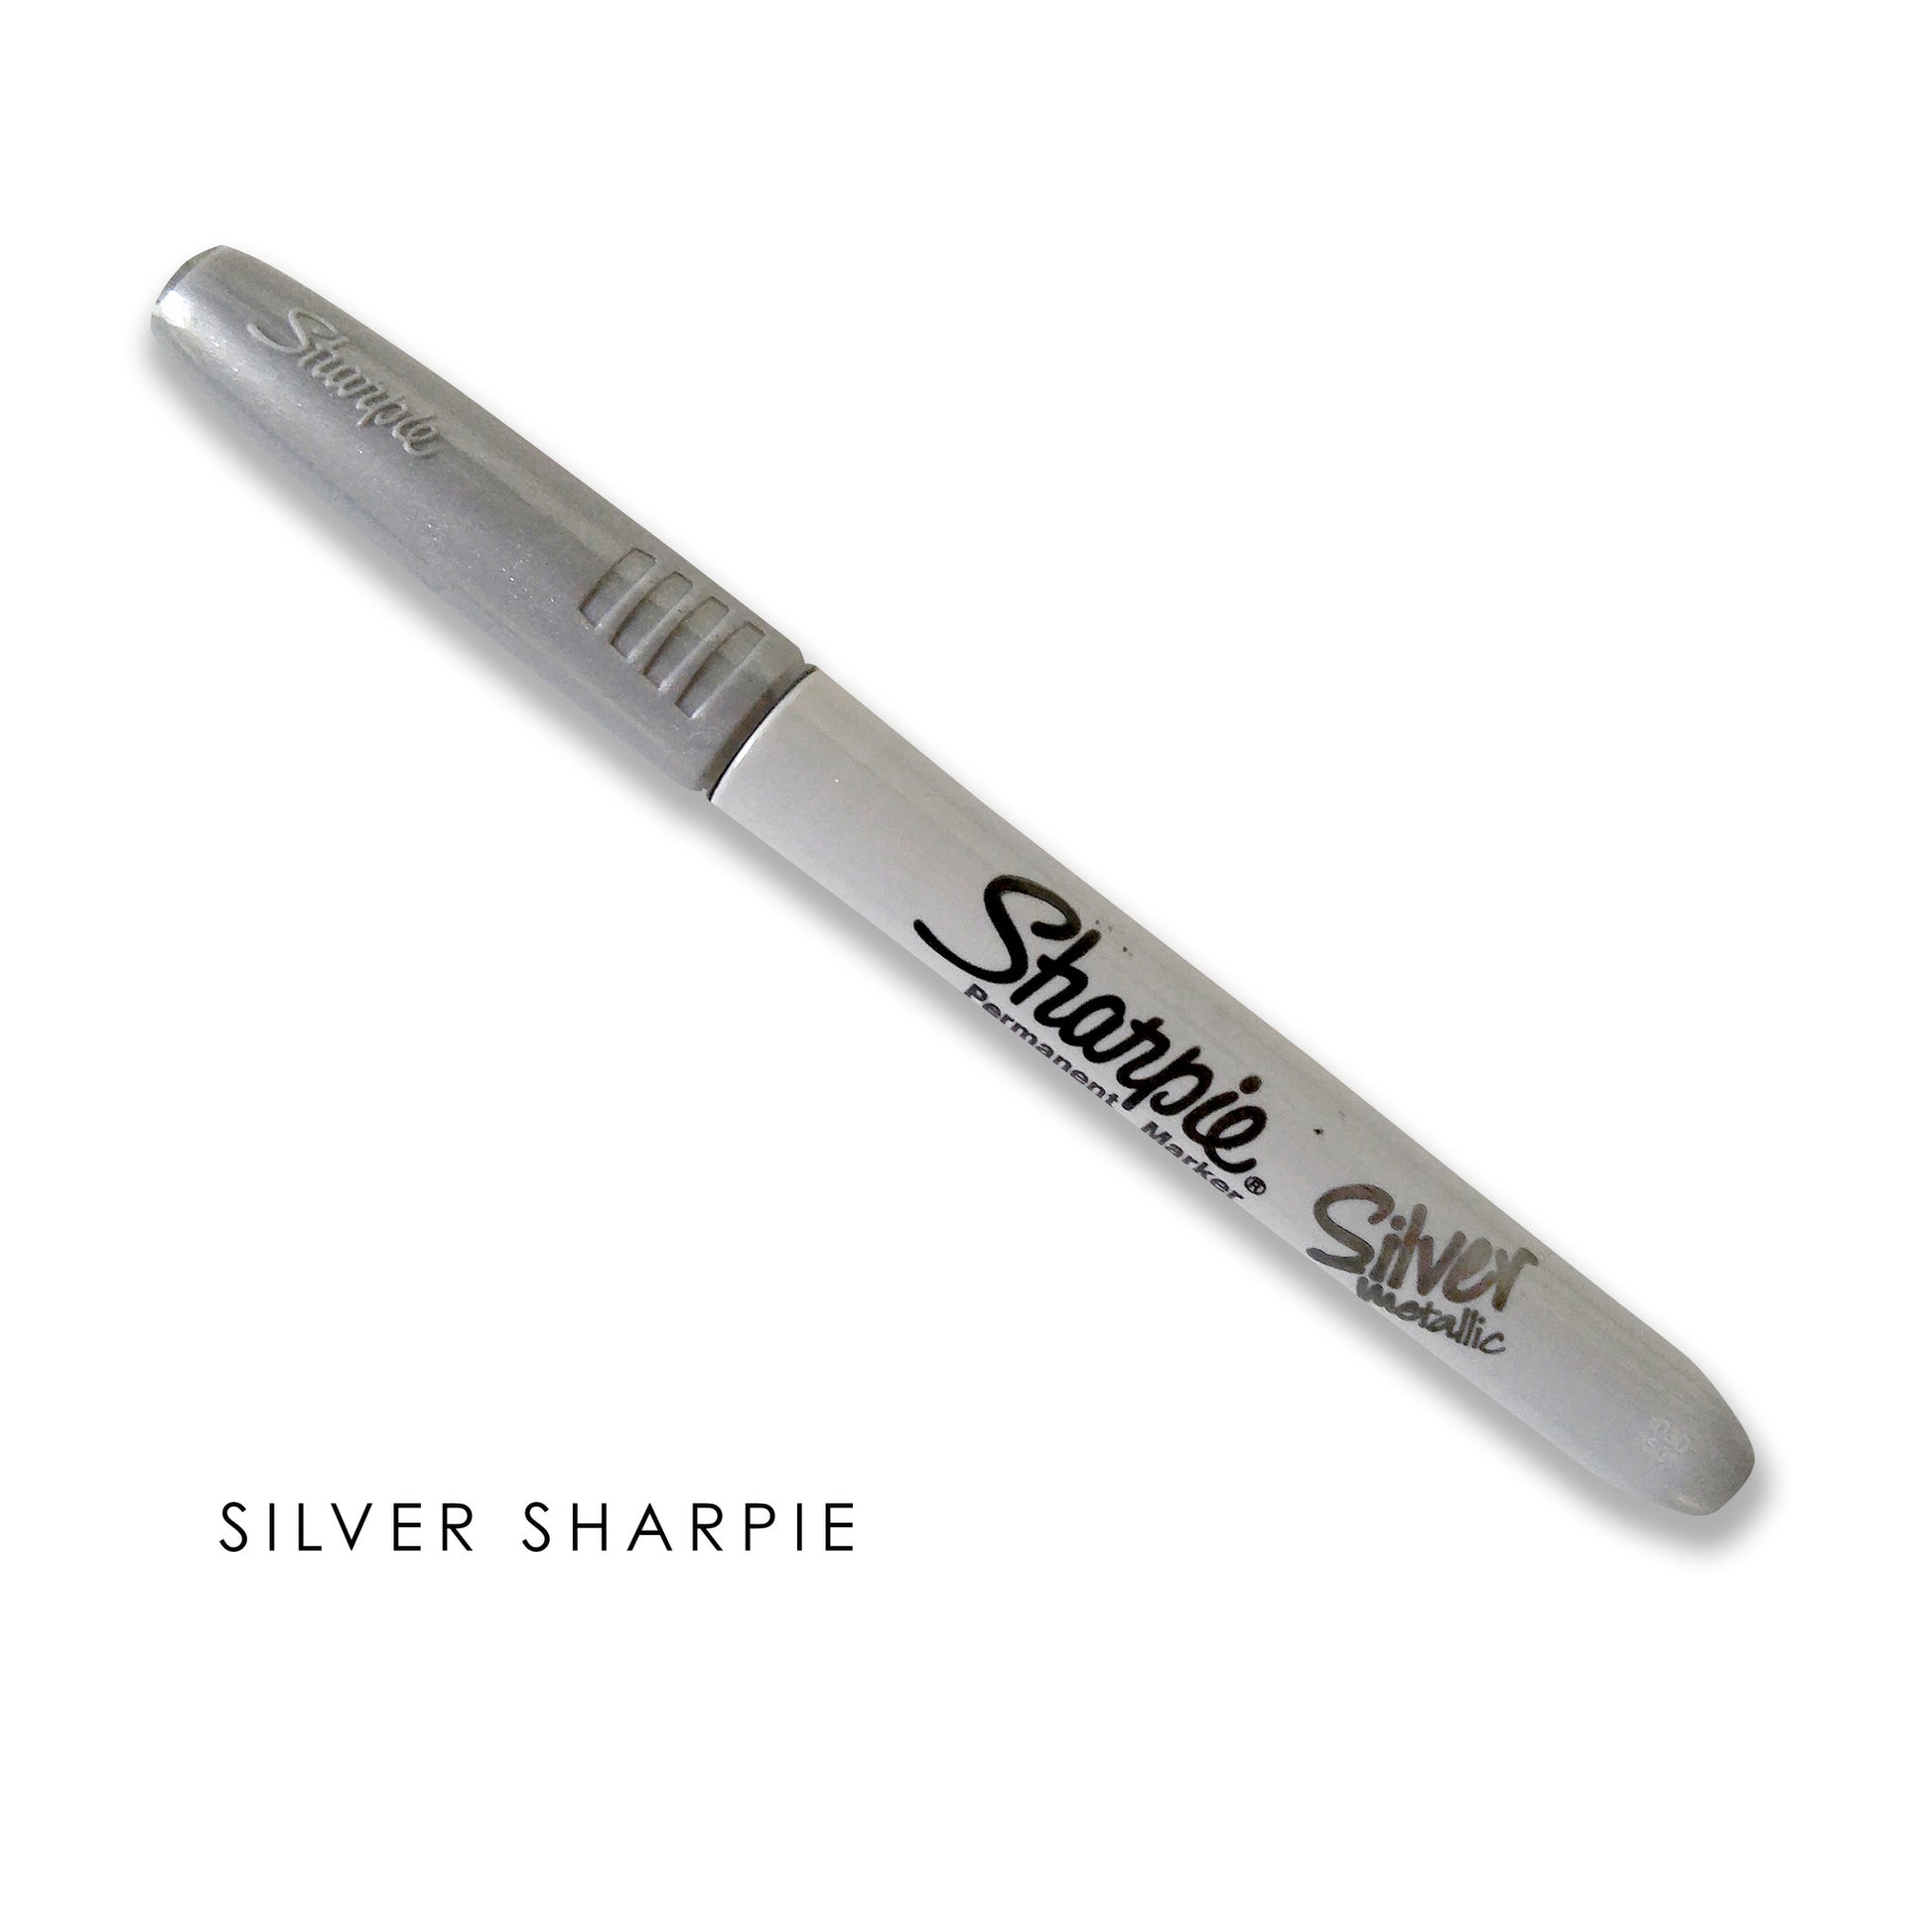 Silver sharpie guest book poster marker